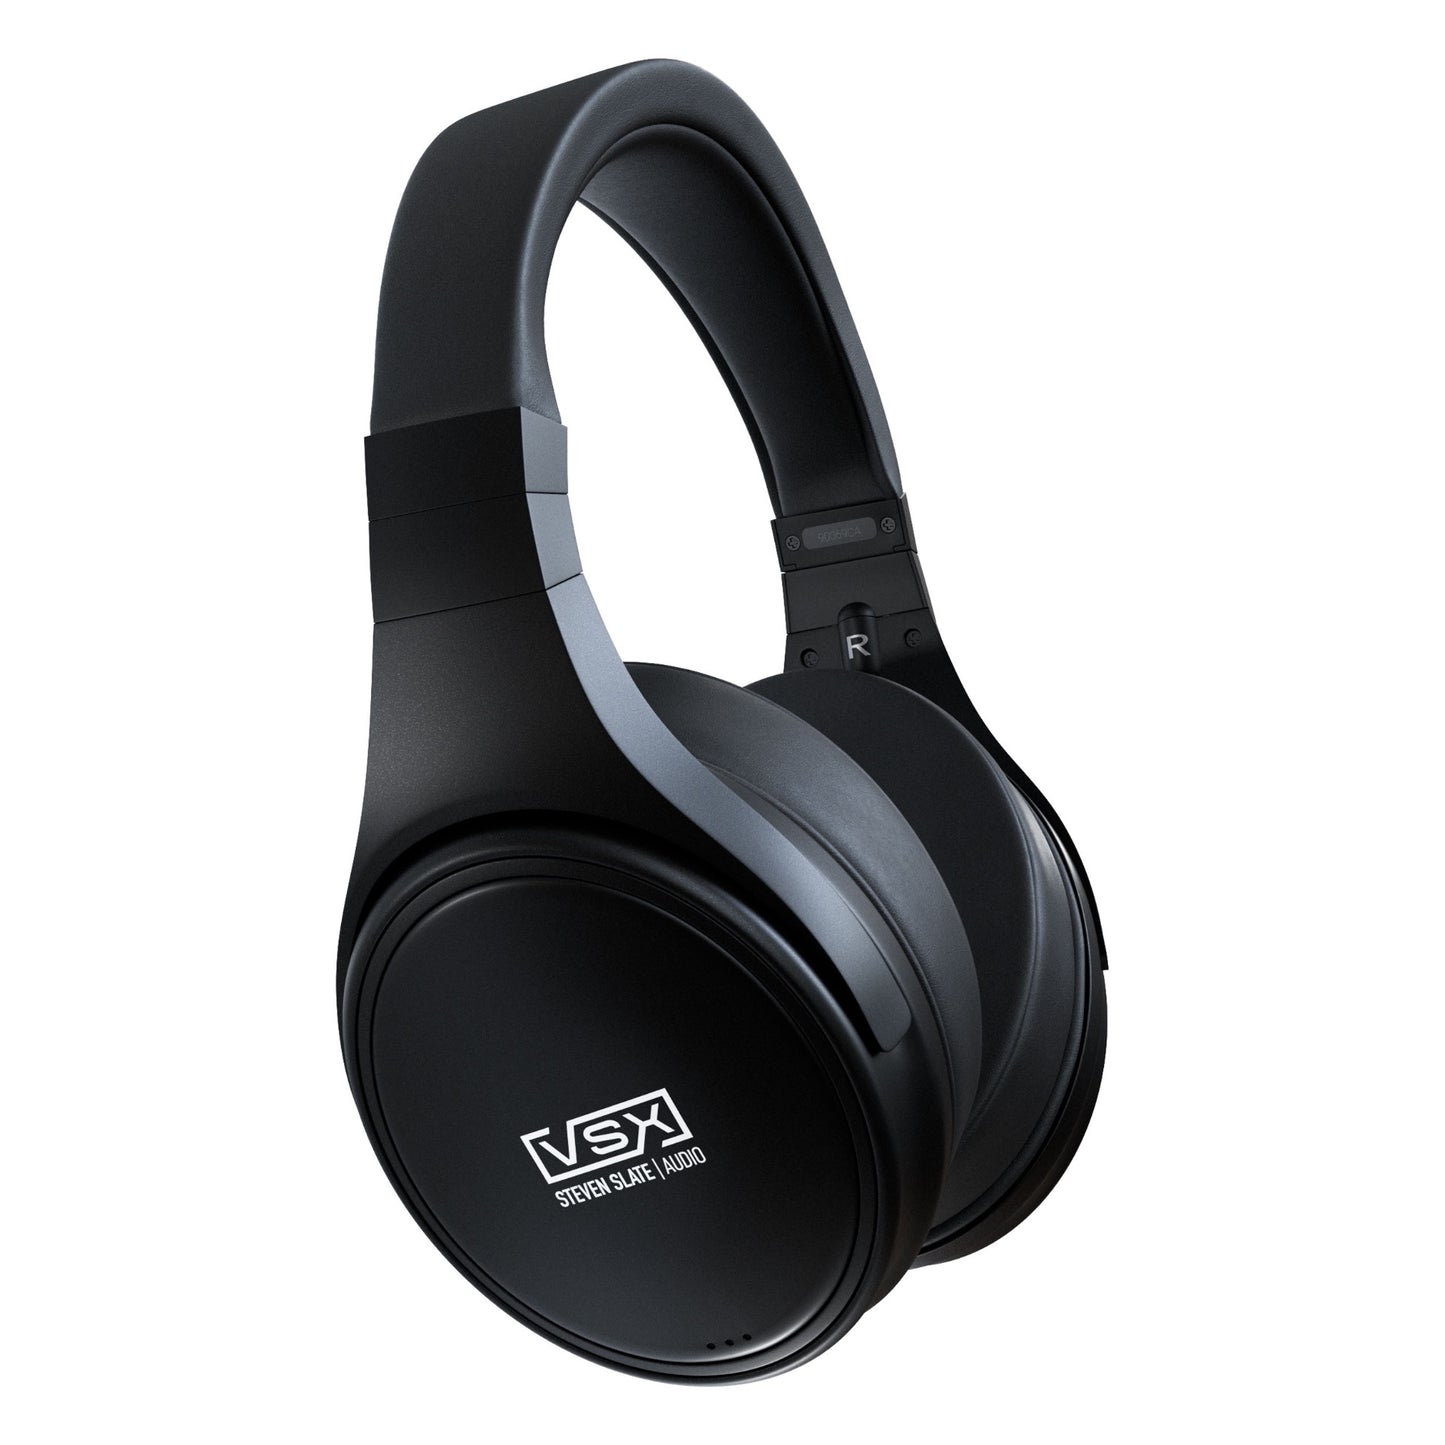 Steven Slate Audio VSX Modeling Headphones Essential Edition